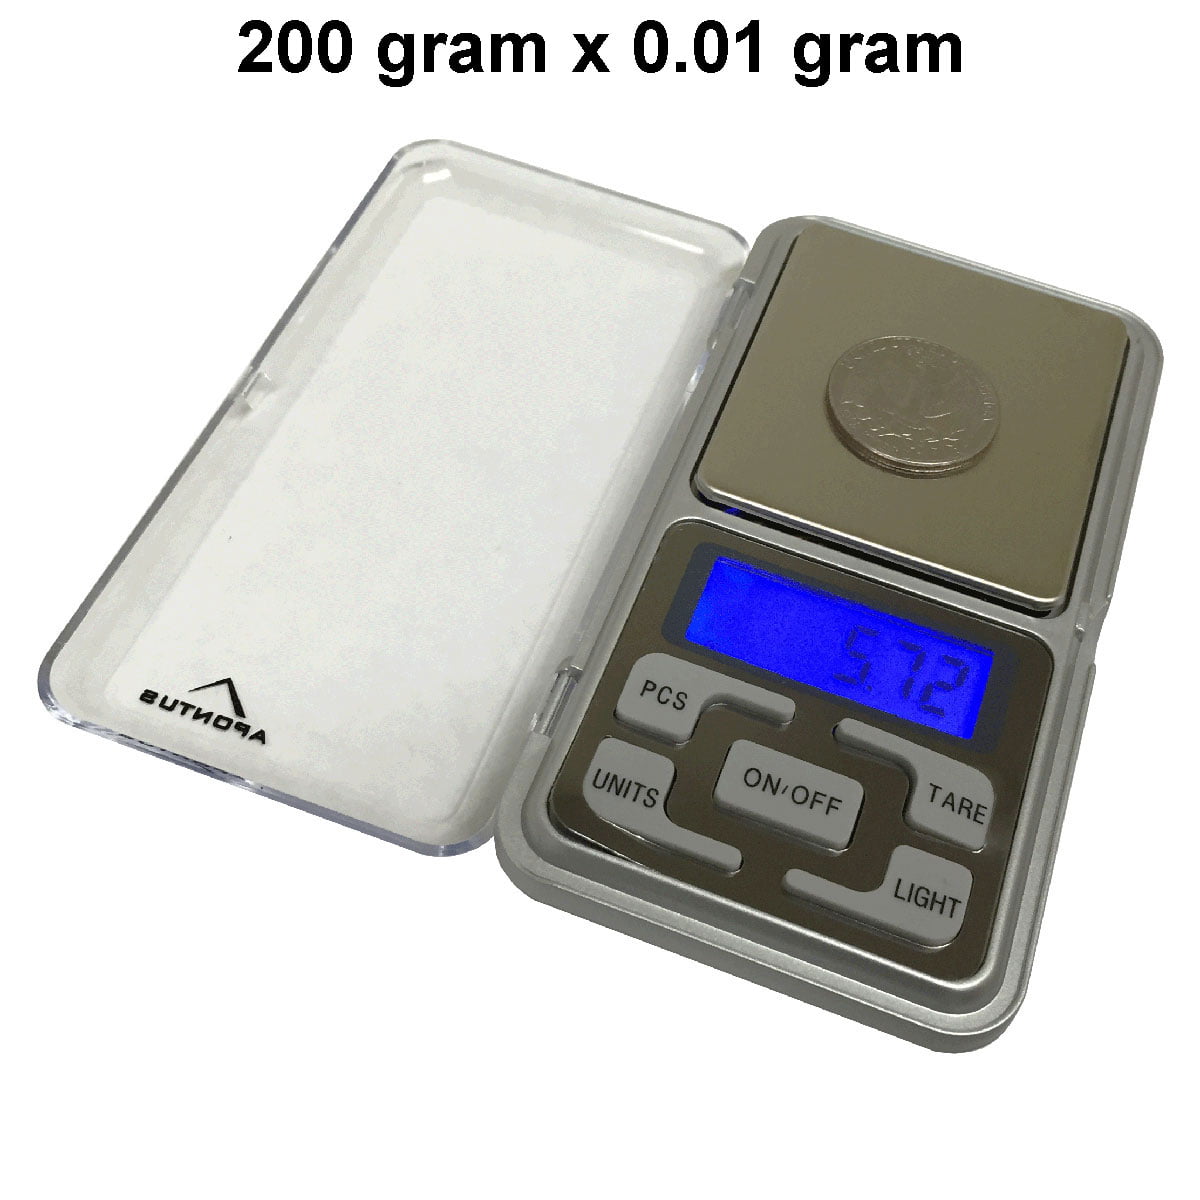 Mini Digital Scale Jewelry Pocket Balance Weight Gram Portable 200g x 0.01g 